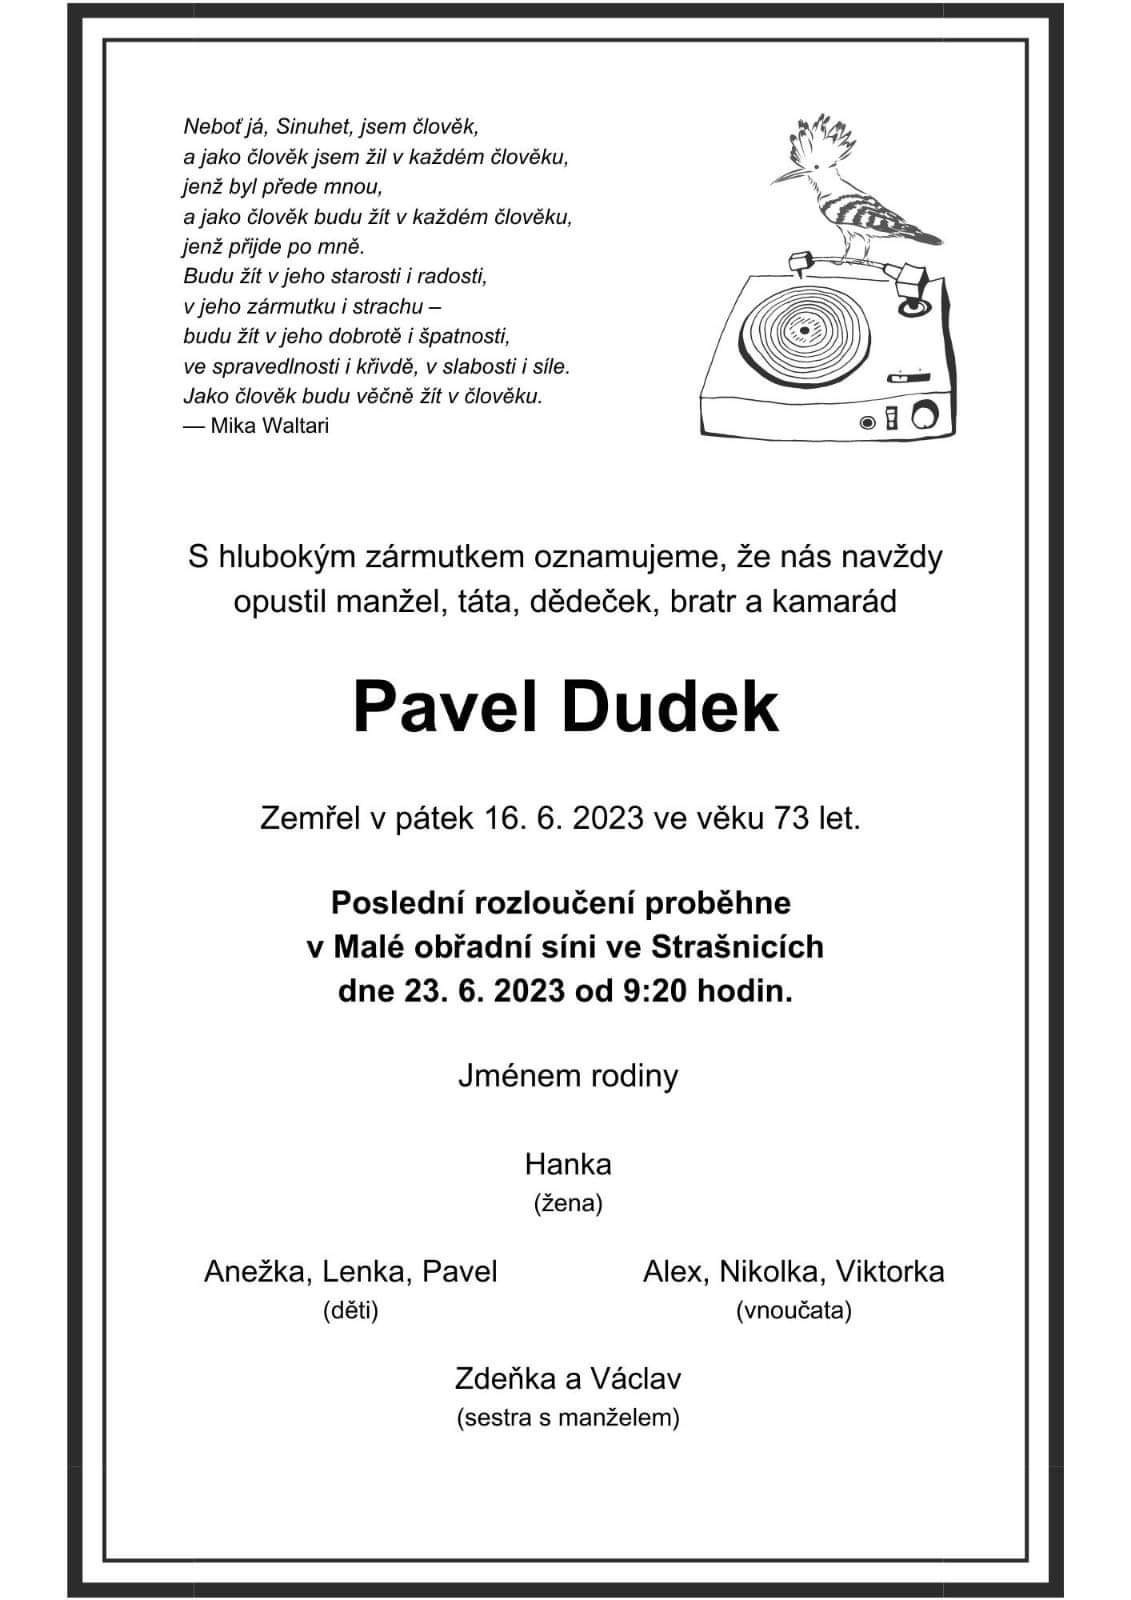 Pavel Dudek zemřel